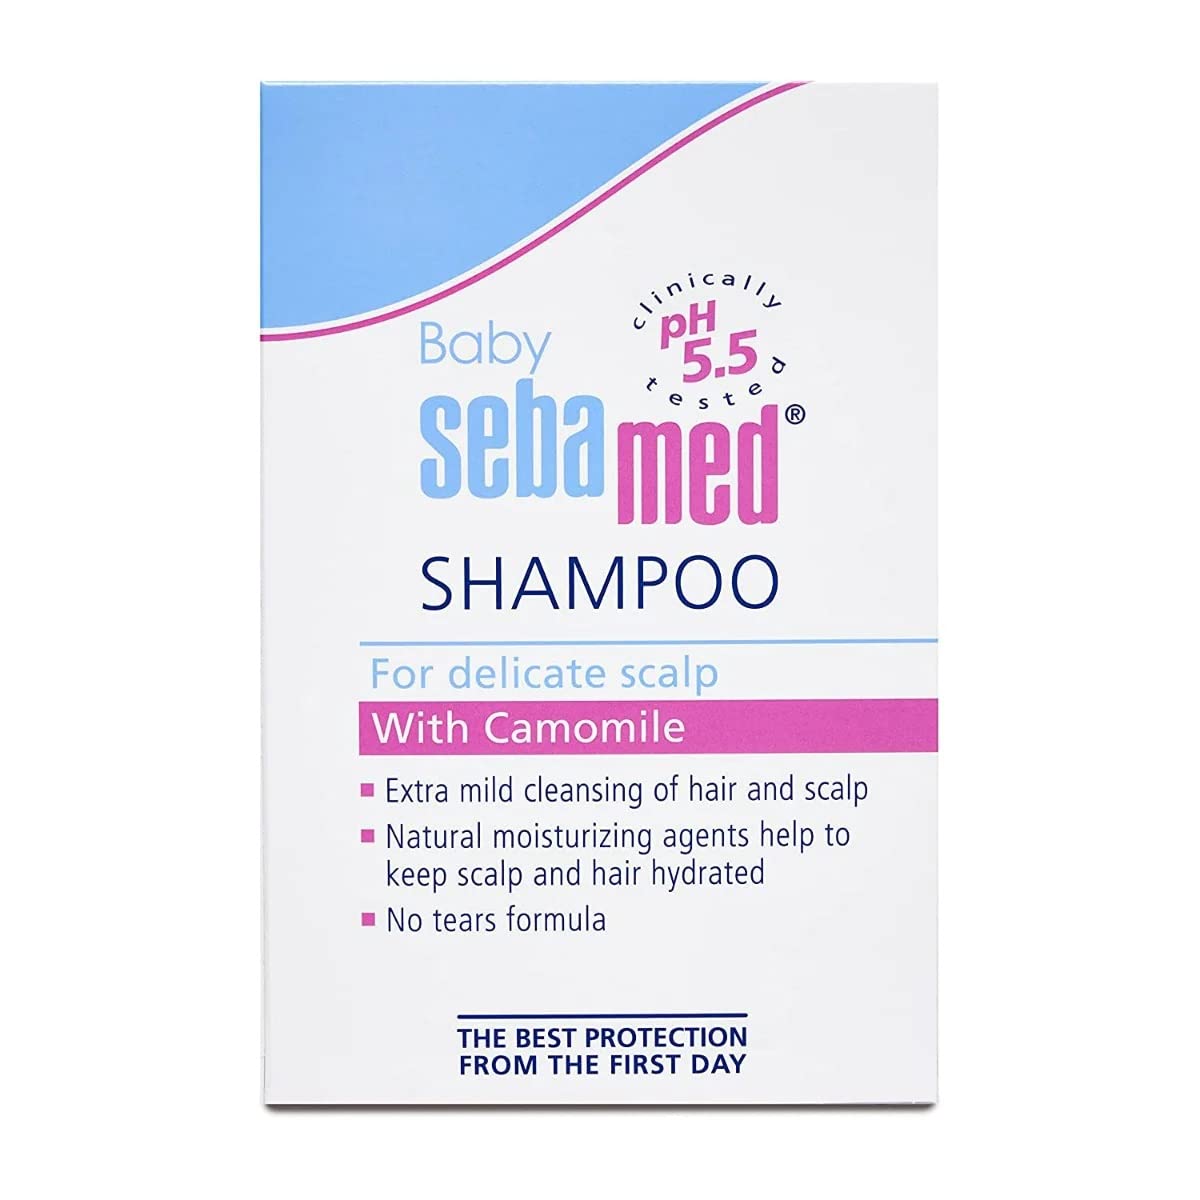 Sebamed Baby Shampoo 50ml| Ph 5.5| Camomile|Natural moisturisers|No tears formula|For delicate scalp